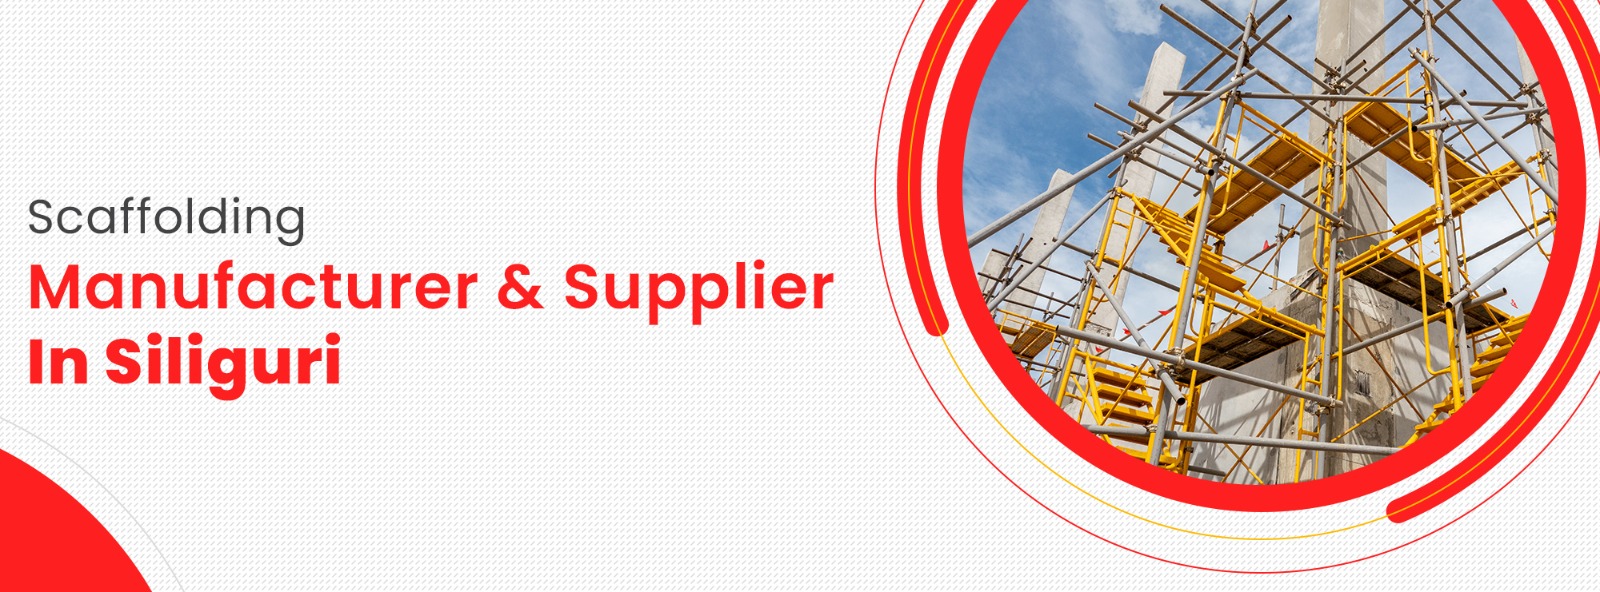 Scaffolding Manufacturer & Supplier In Siliguri